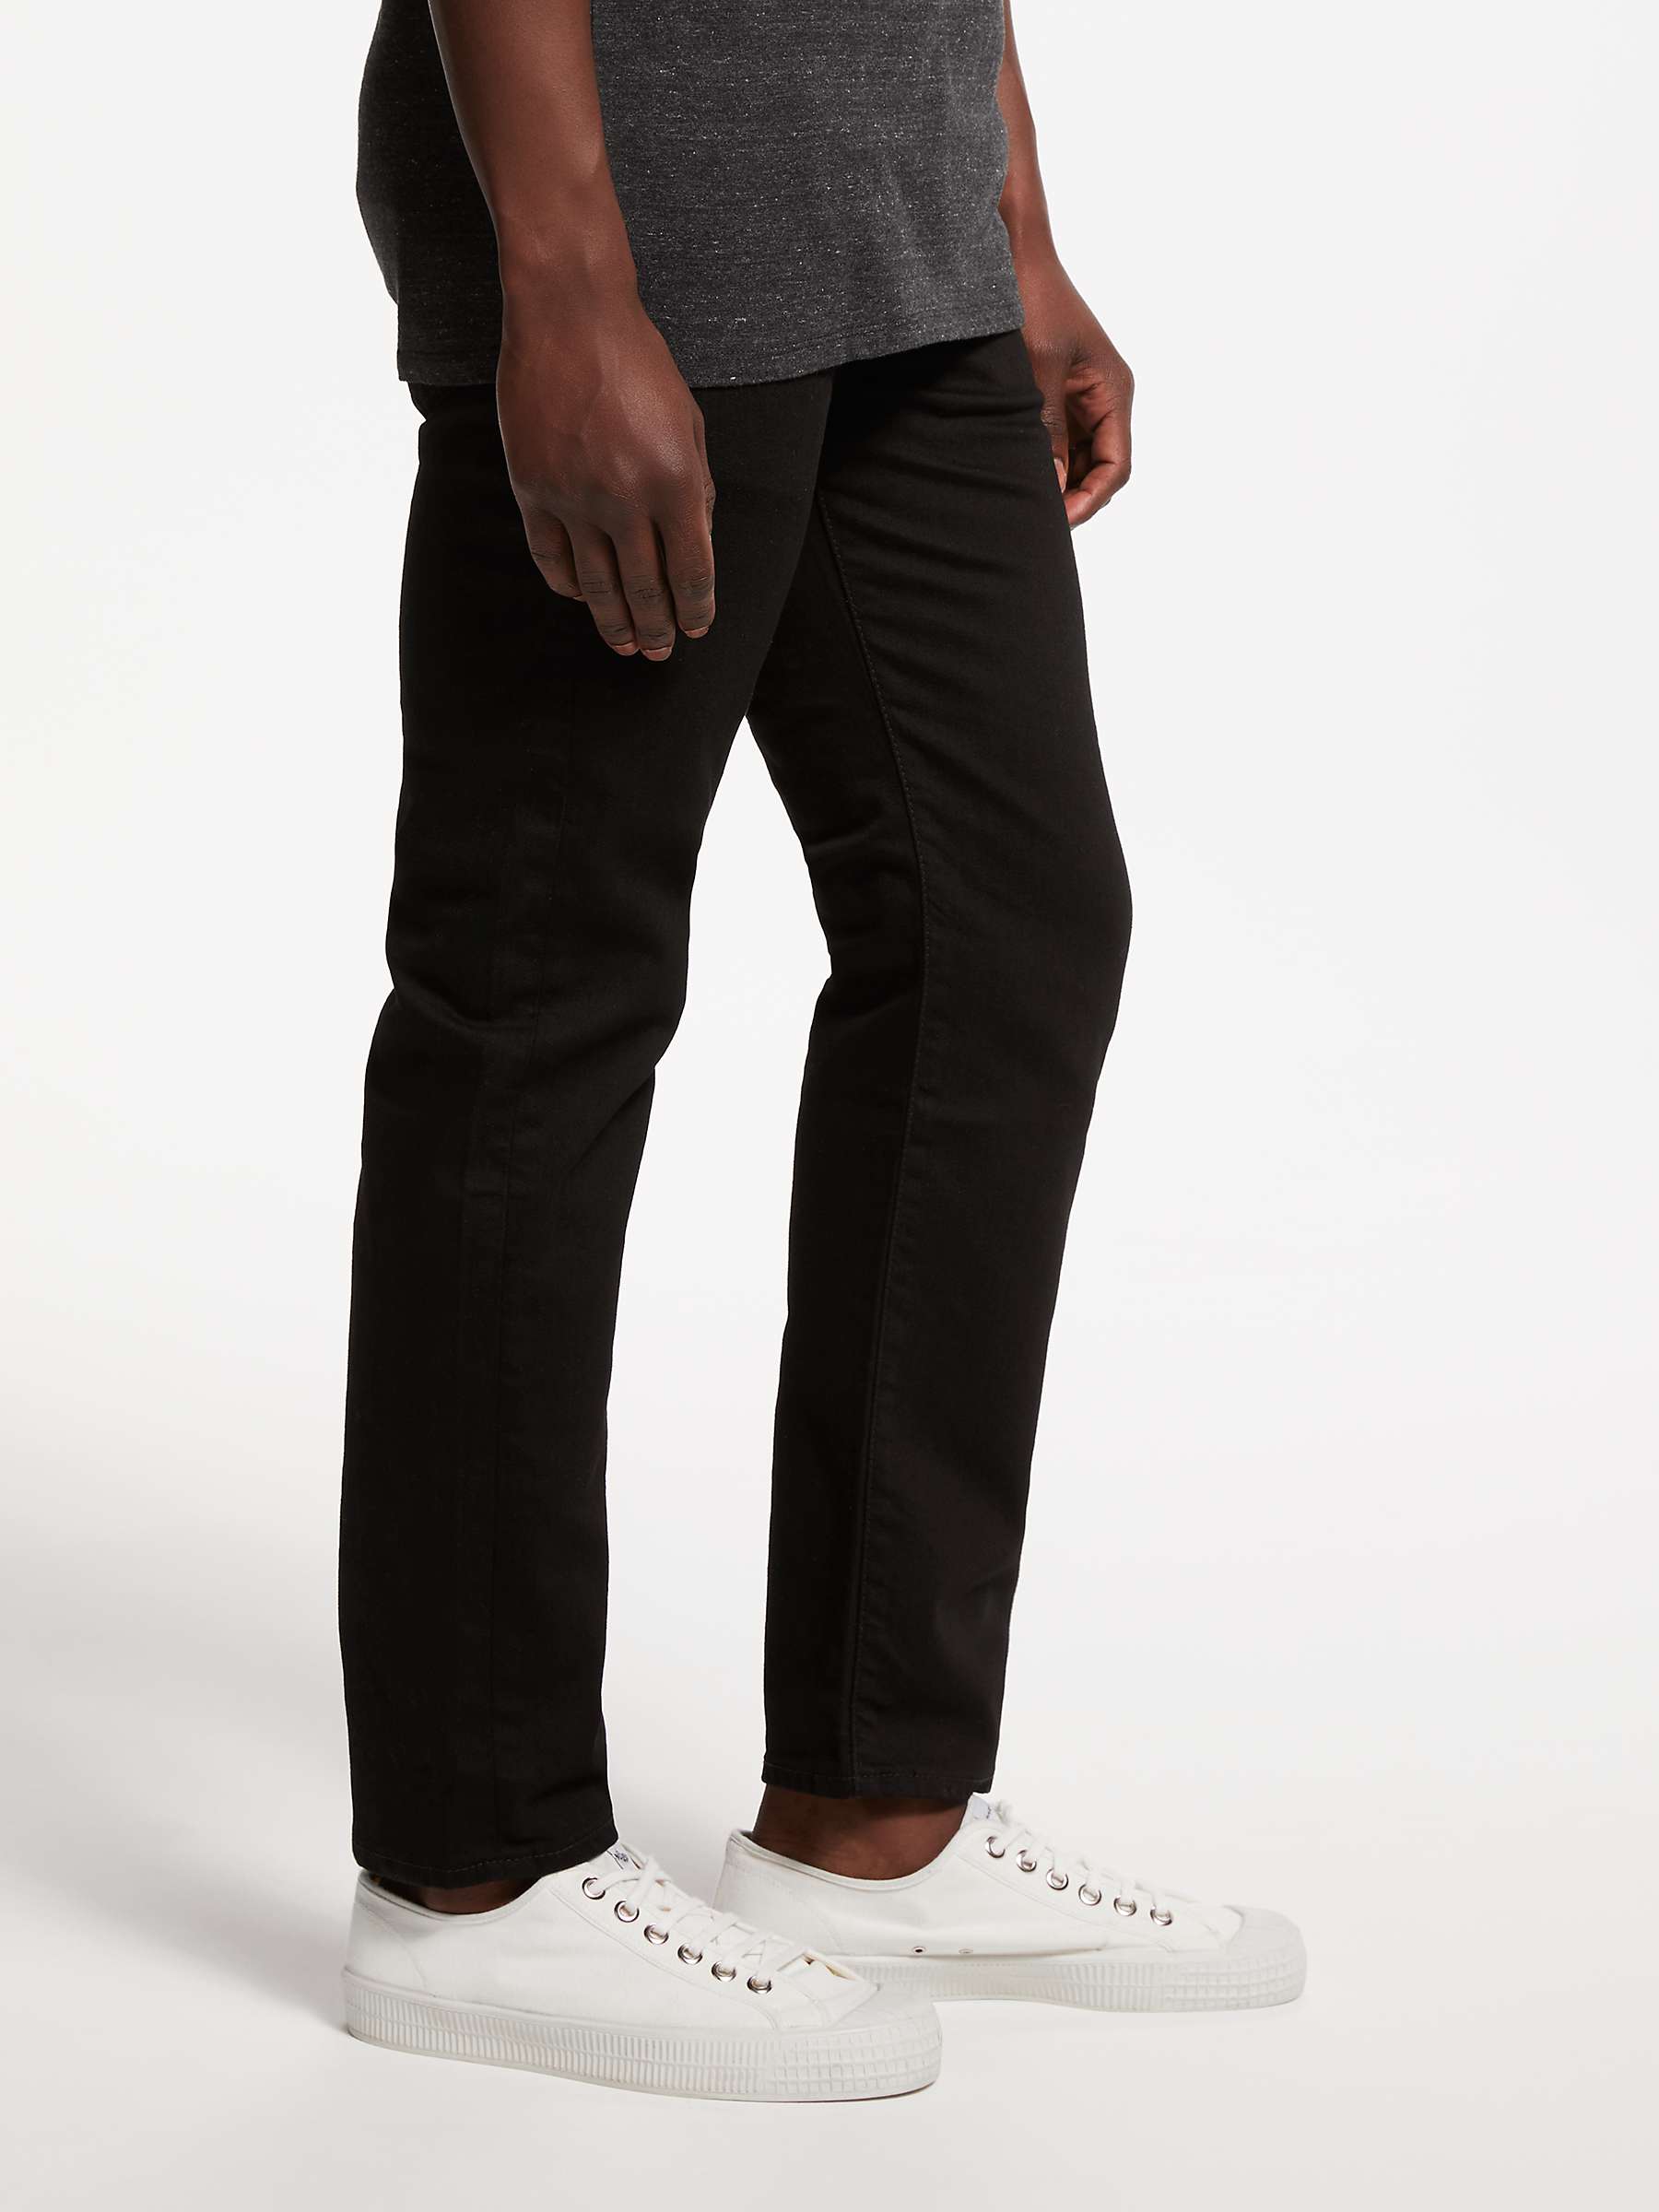 Buy Levi's 502 Regular Tapered Jeans, Nightshine Online at johnlewis.com